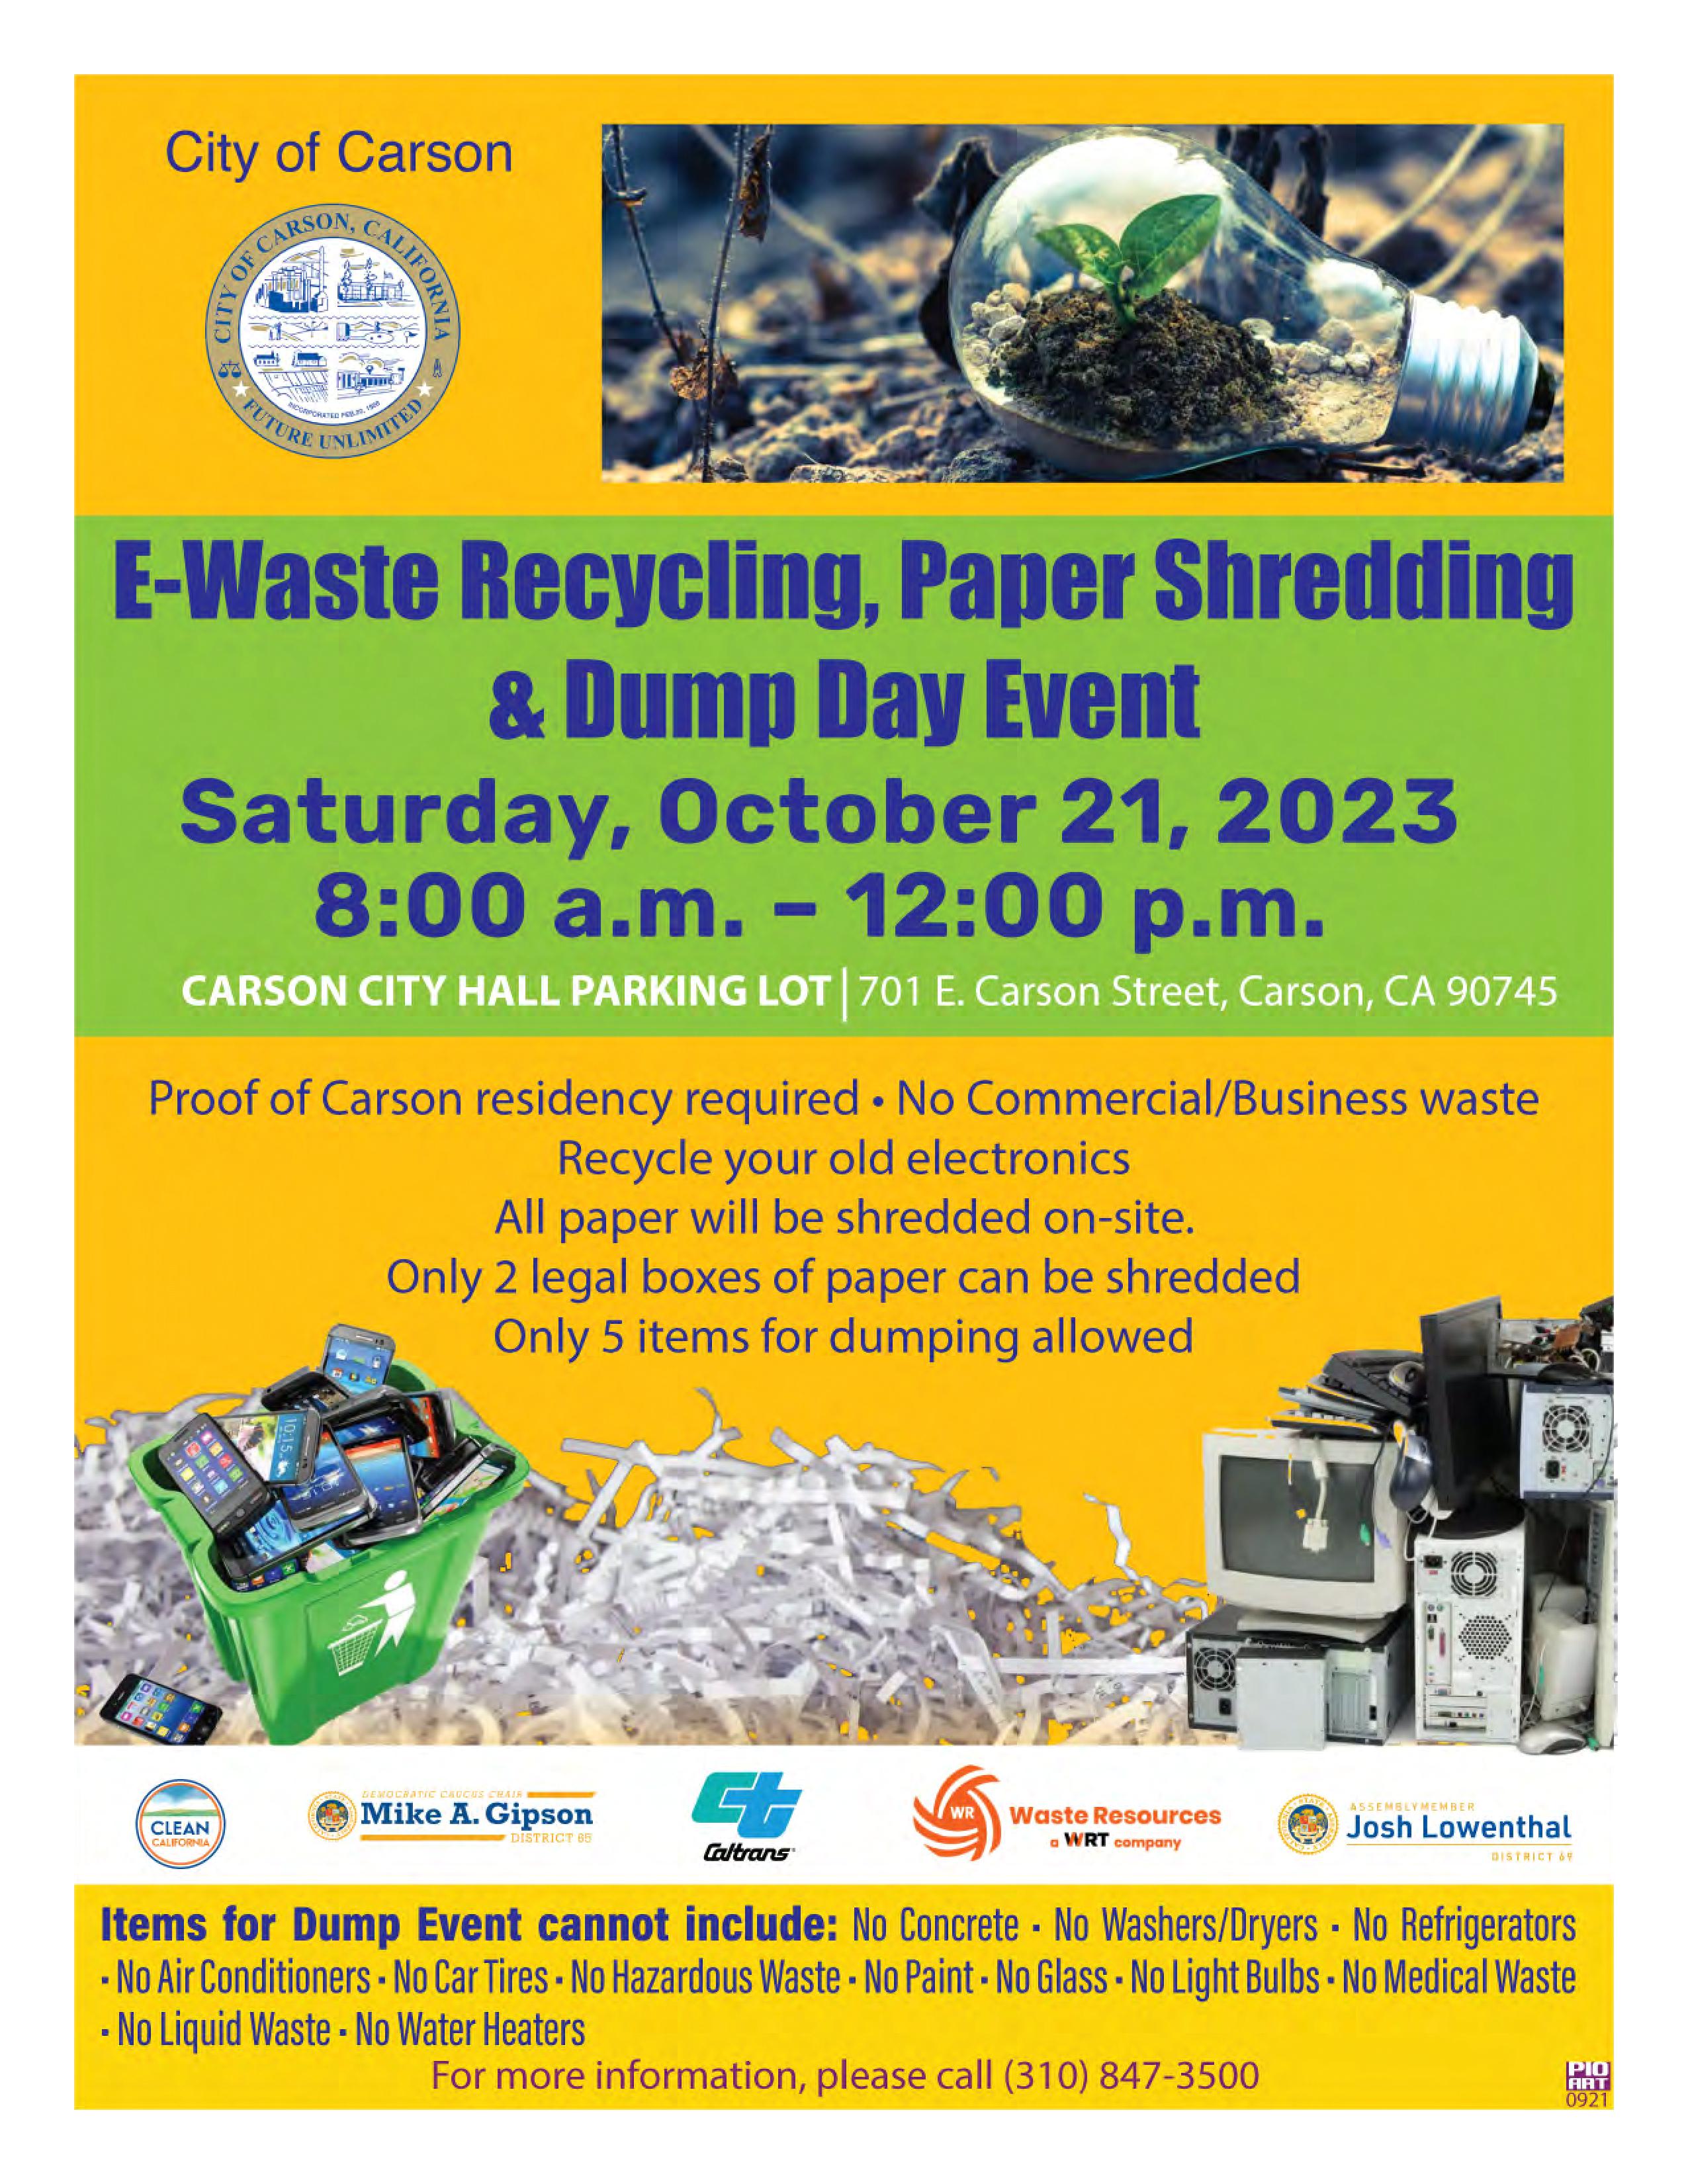 Carson E-Waste Recycling, Paper Shredding & Dump Day